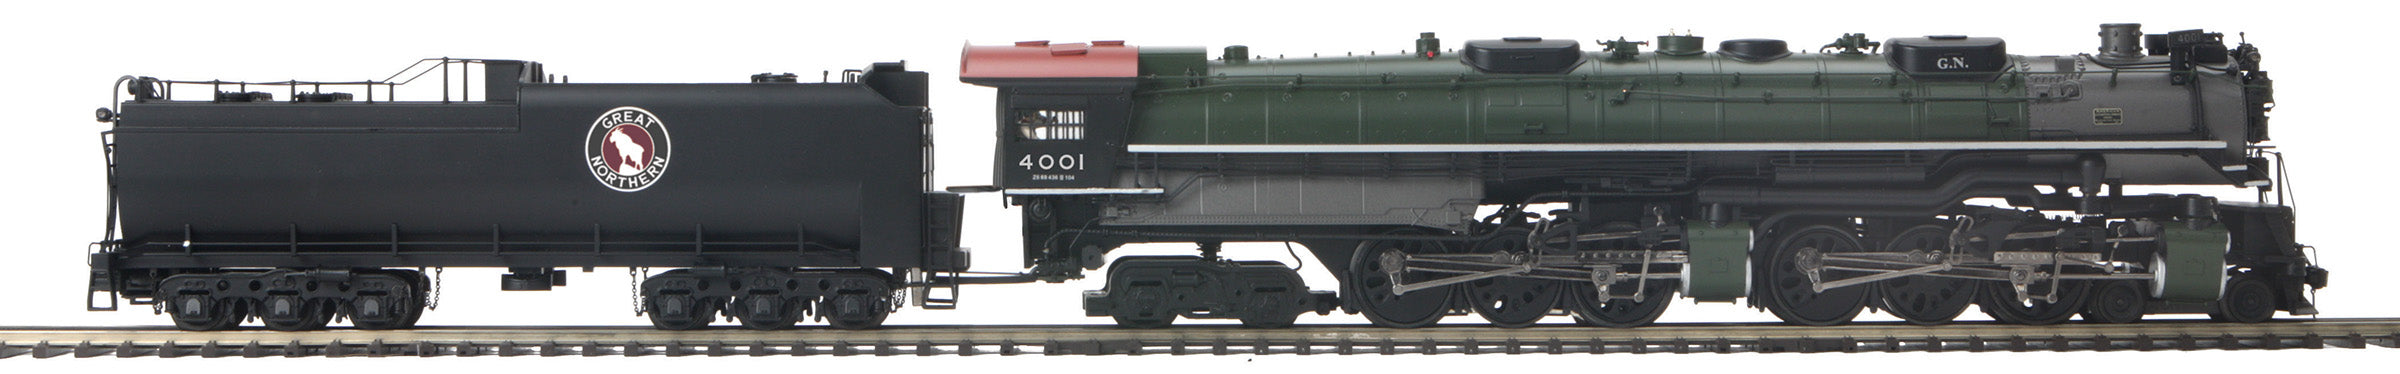 MTH 20-3937-1 - 4-6-6-4 Z-6 Challenger Steam Engine "Great Northern" #4001 w/ PS3 (Green)